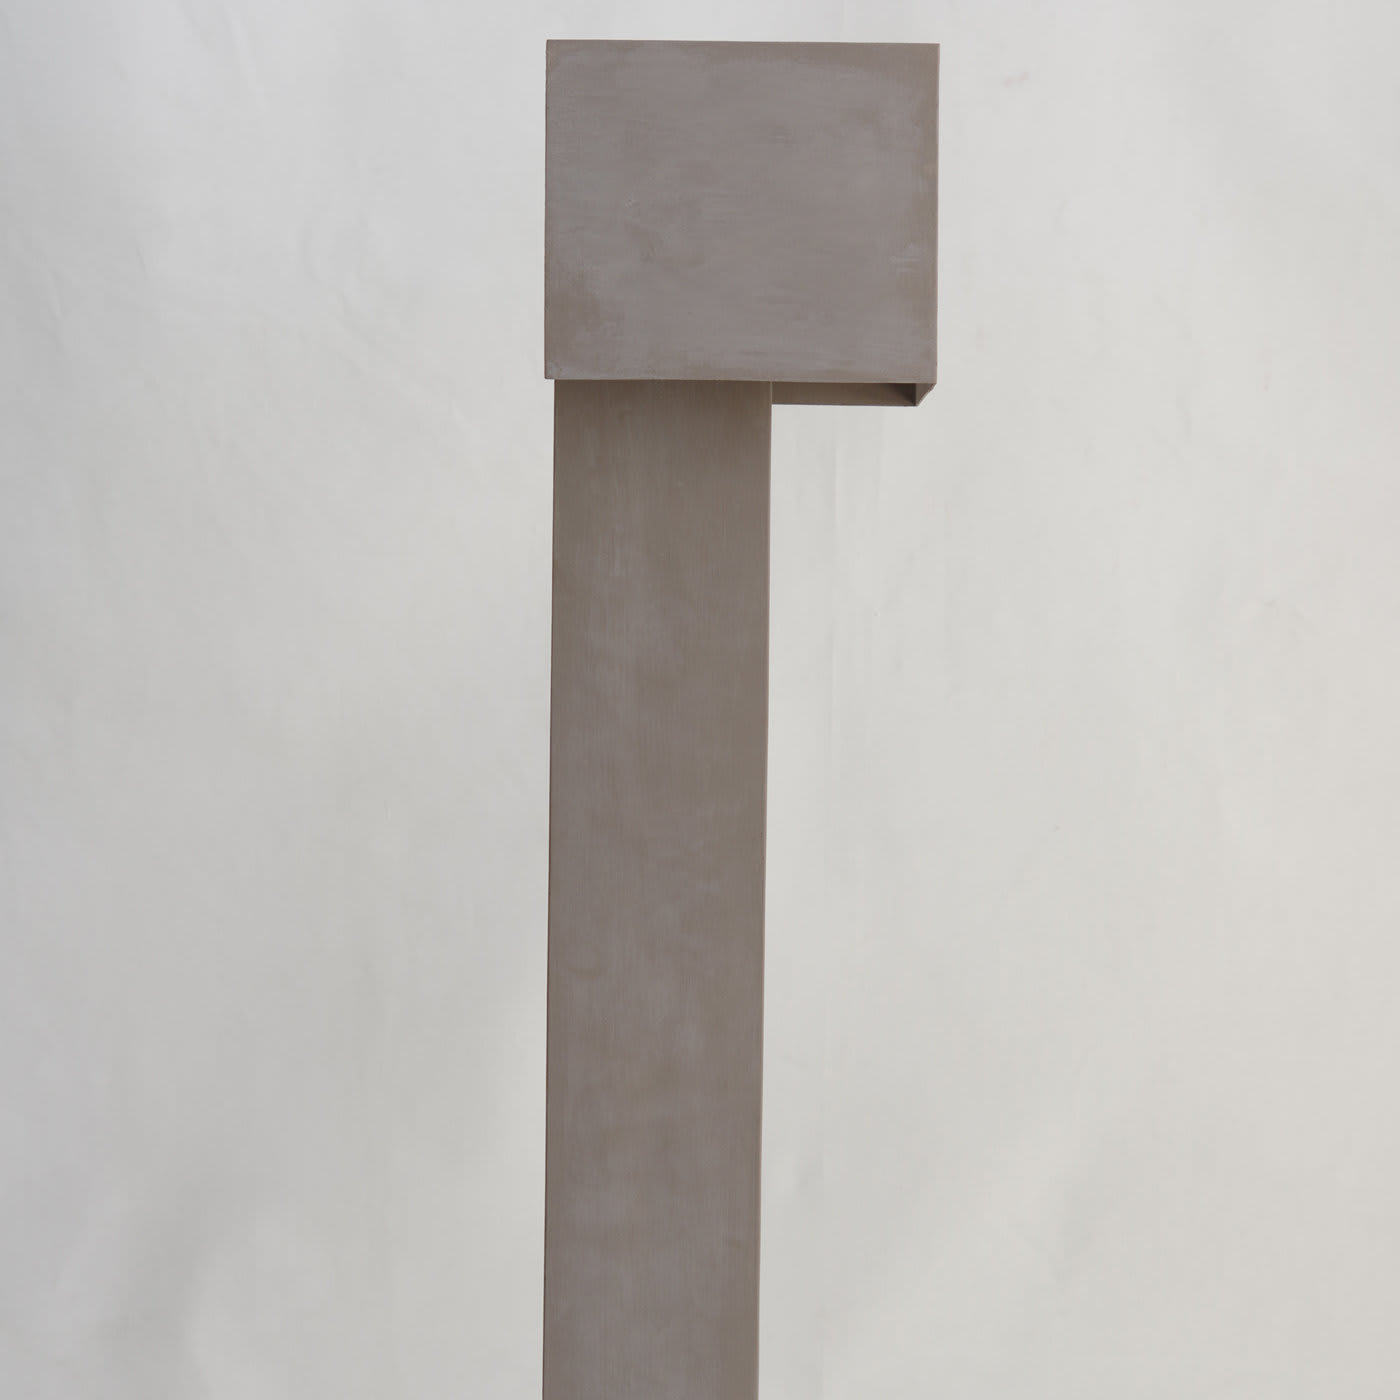 Twin Towers Light-Sculpture - Giorgio Cubeddu